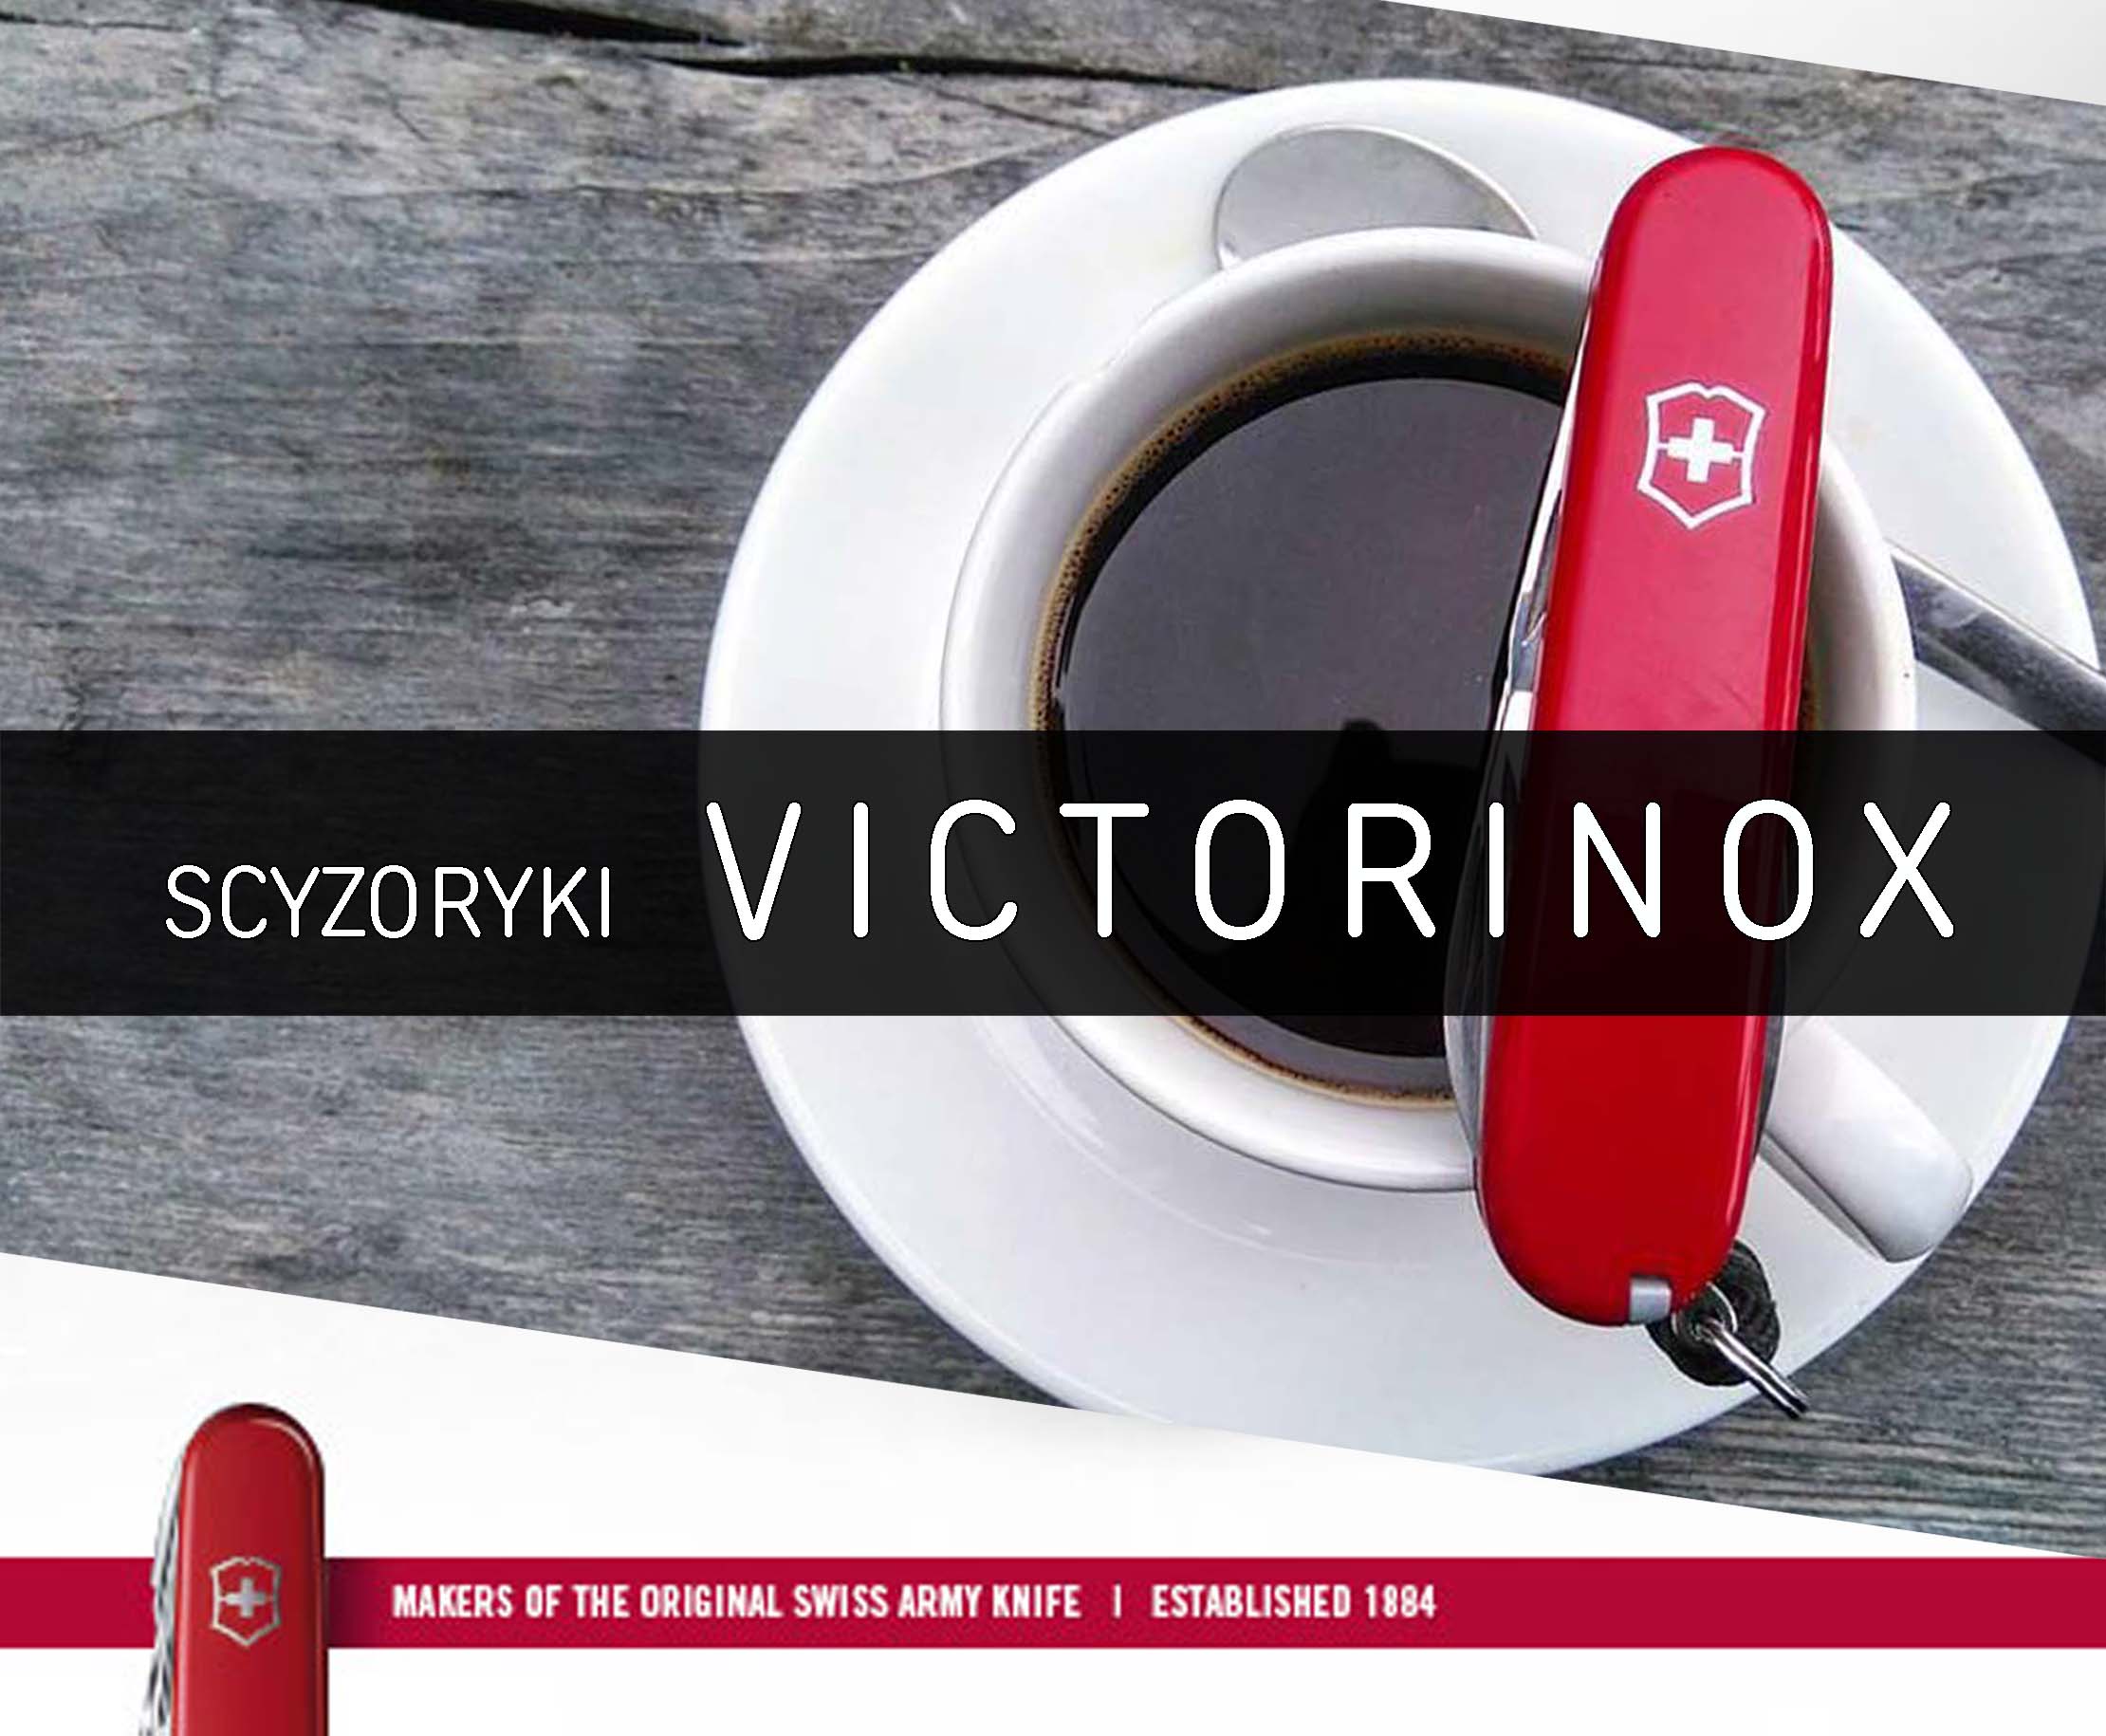 Scyzoryki Victorinox - zegart.pl